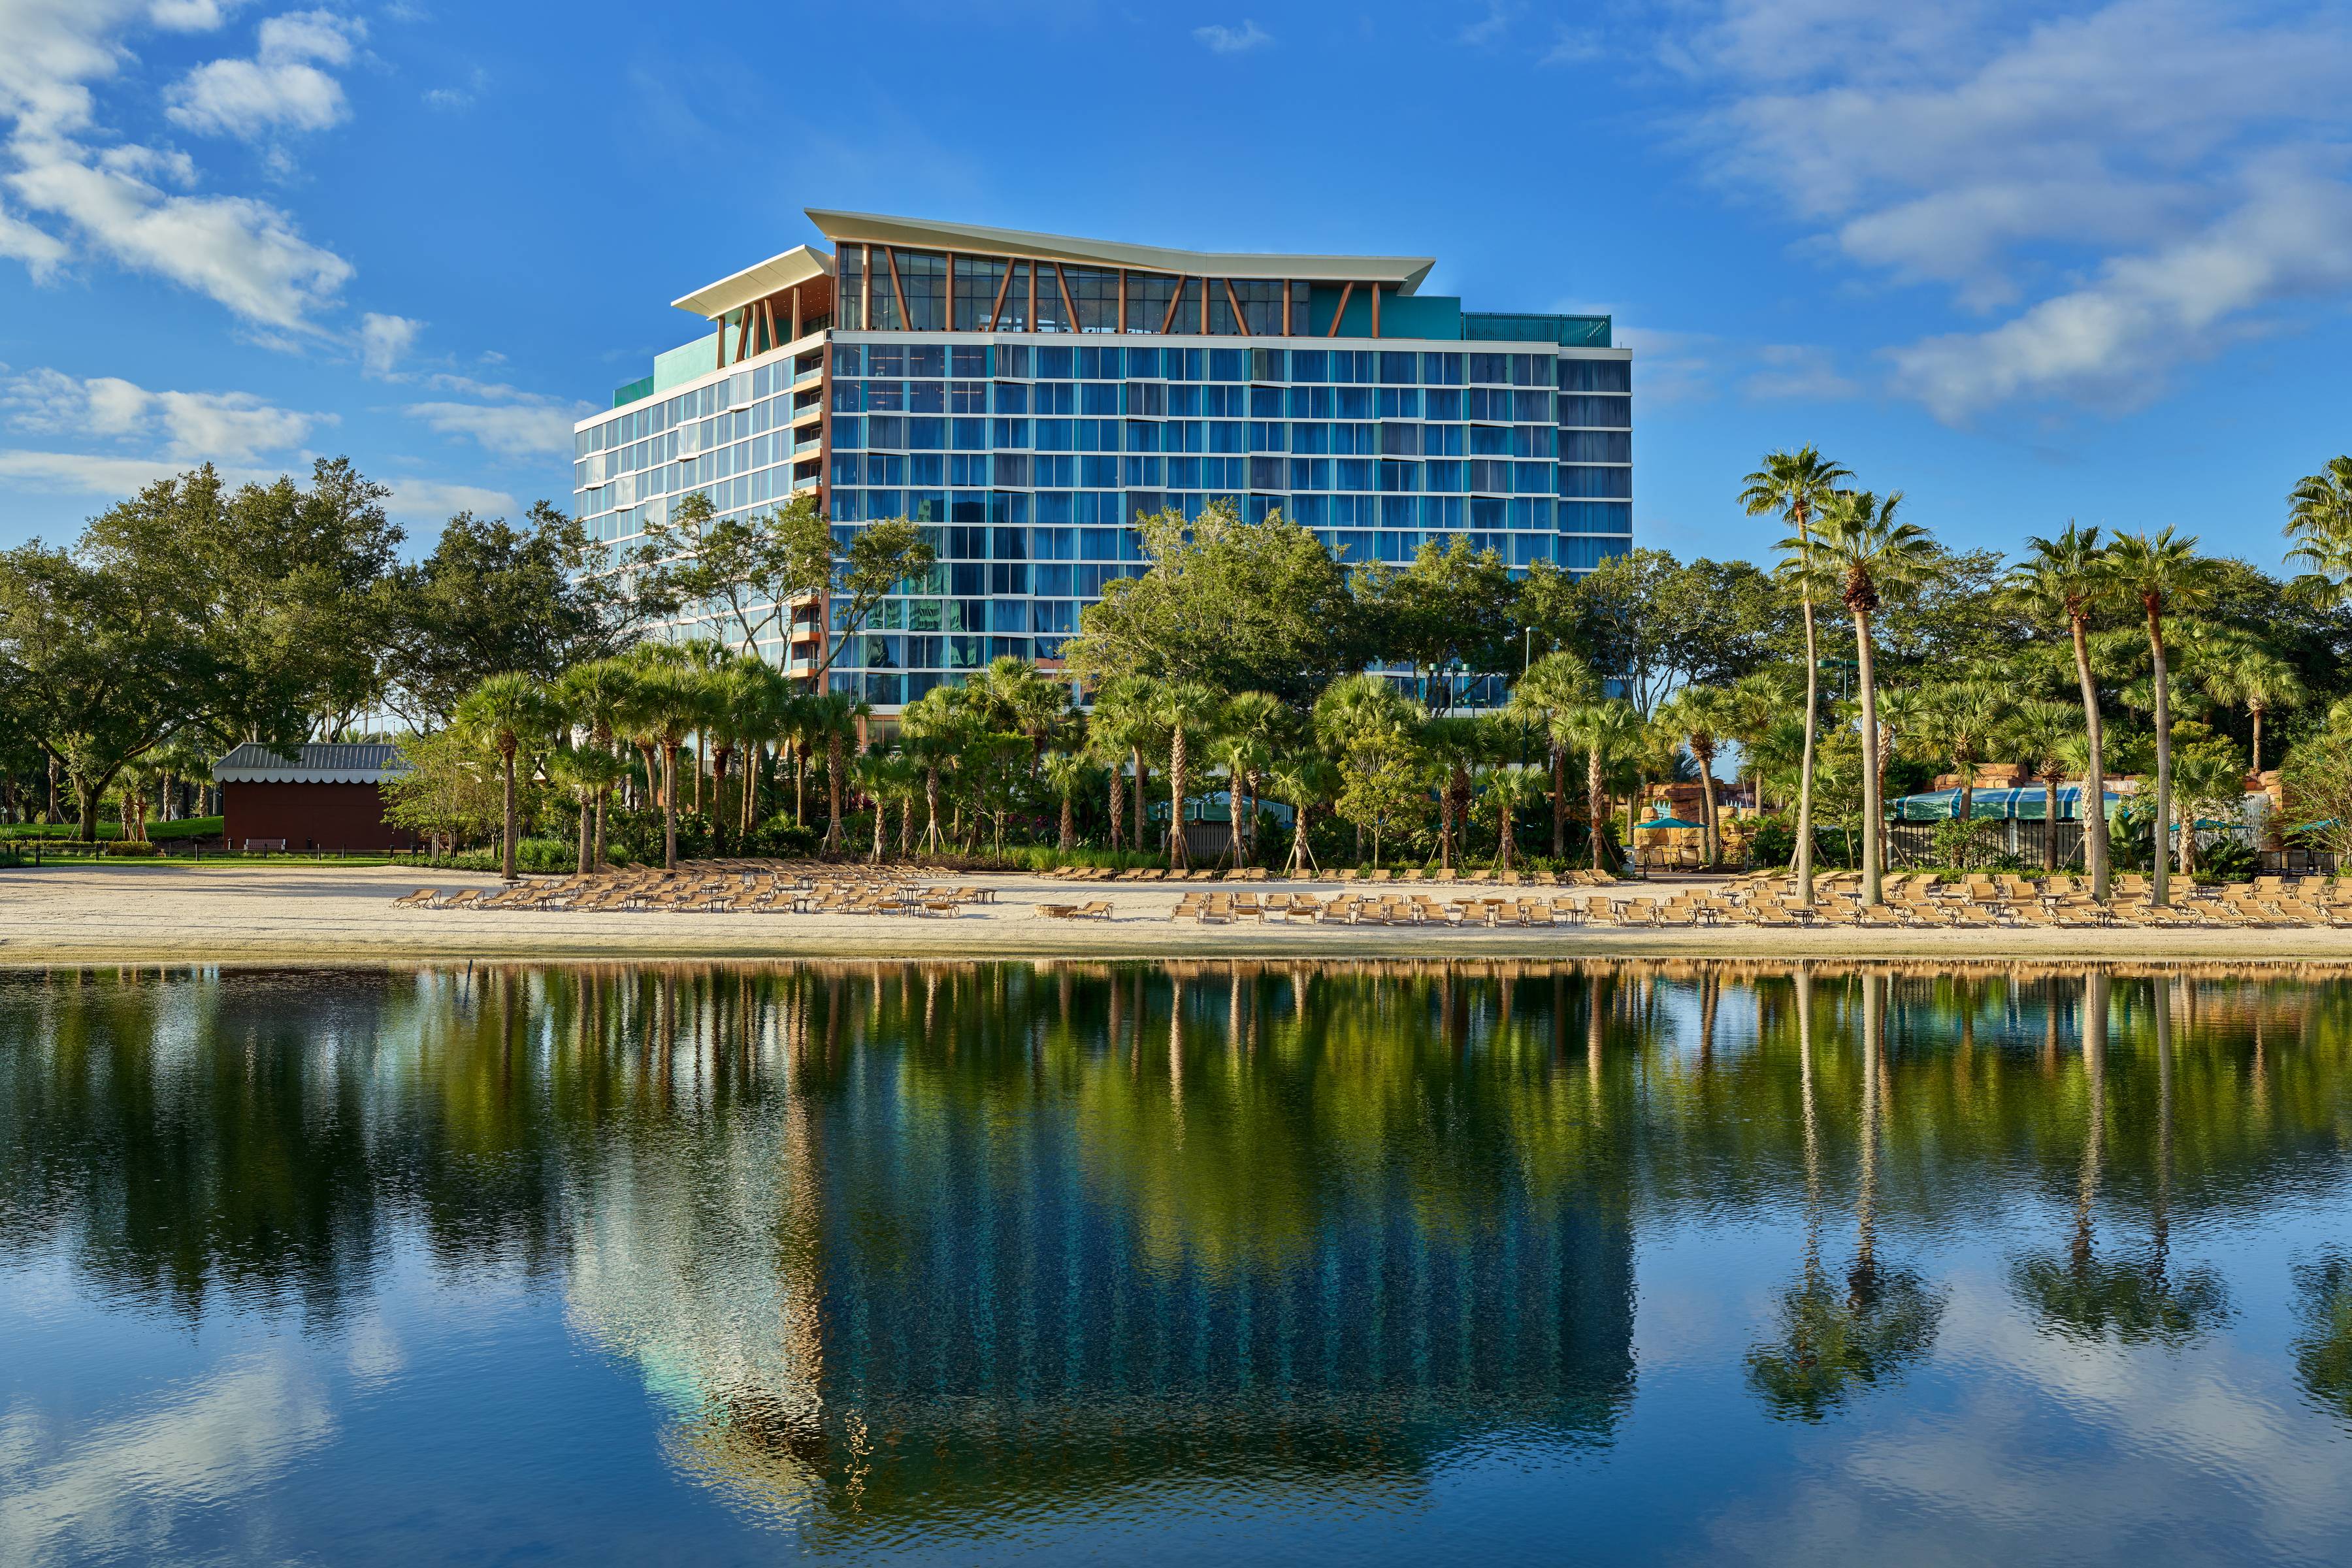  Walt Disney World Swan Reserve hotel lobby and restaurants